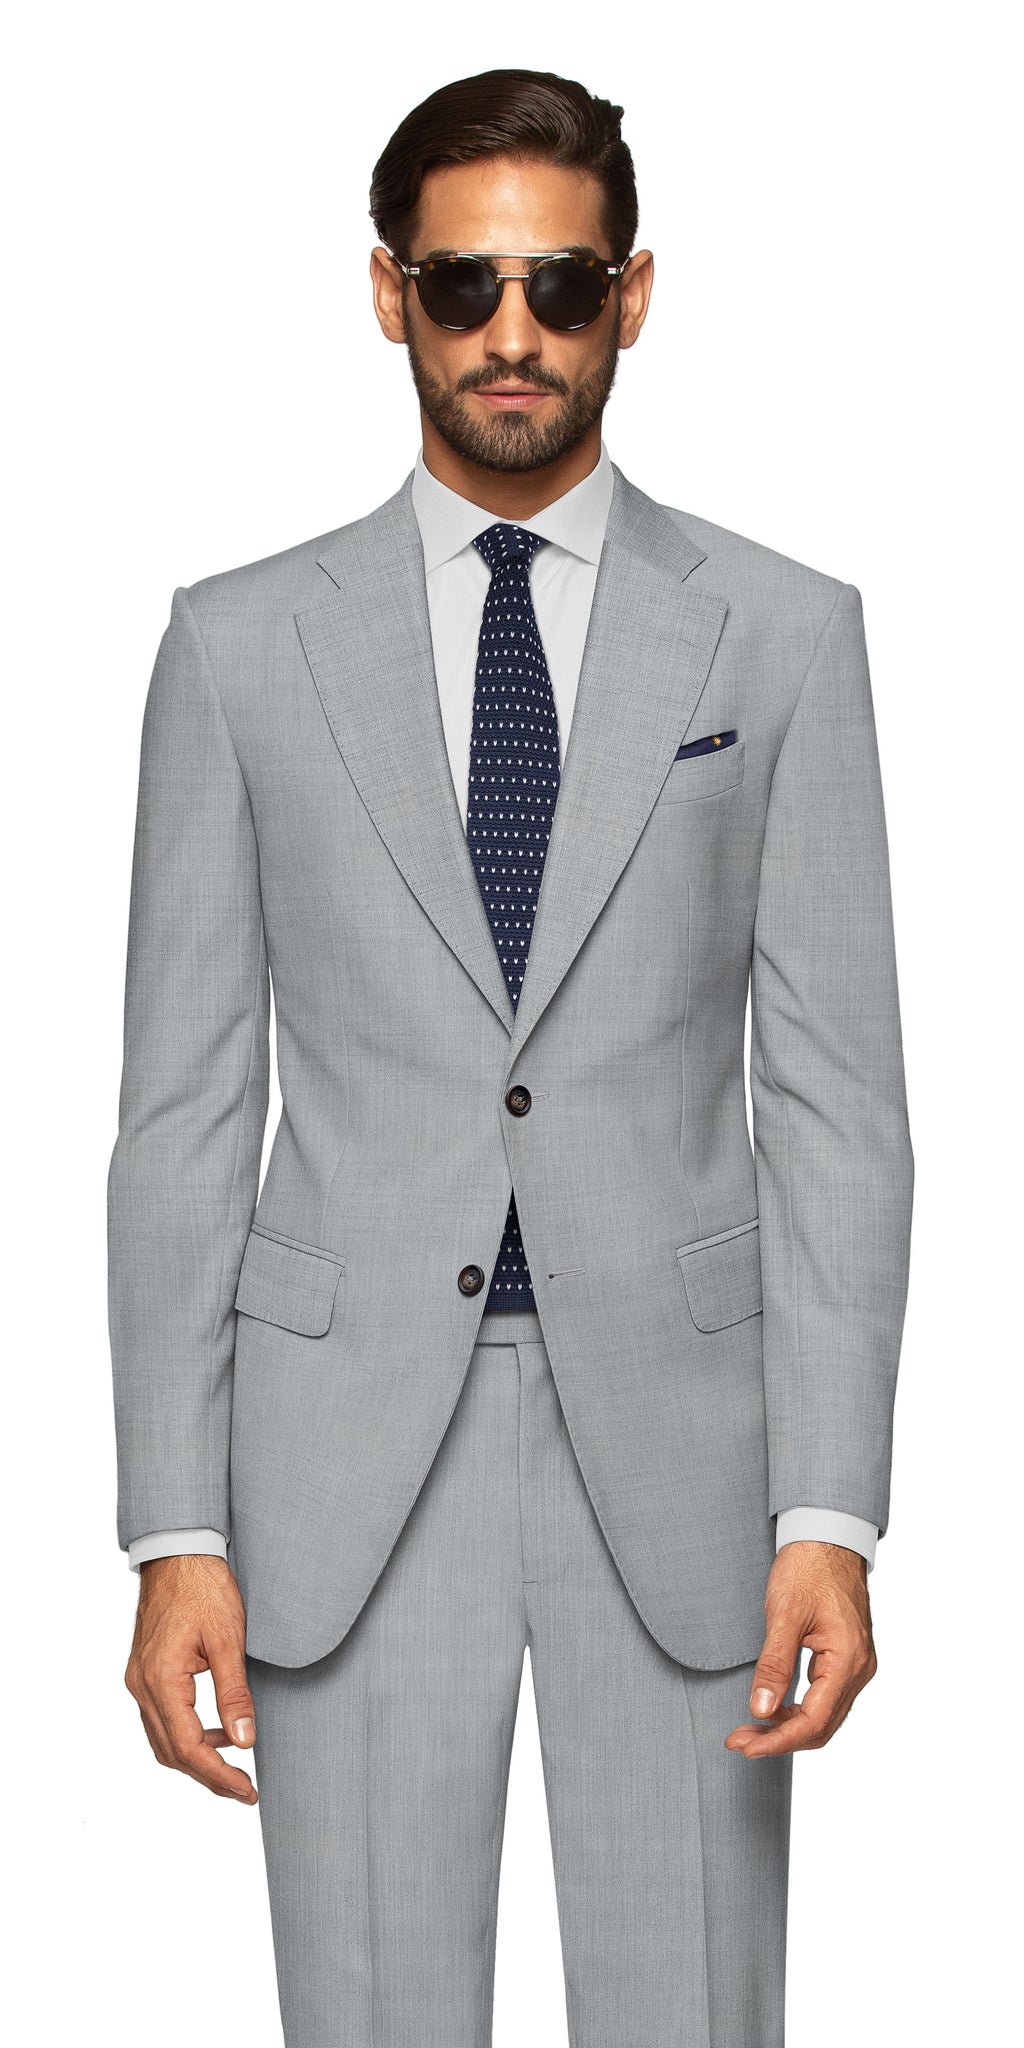 Merida Grey Suit